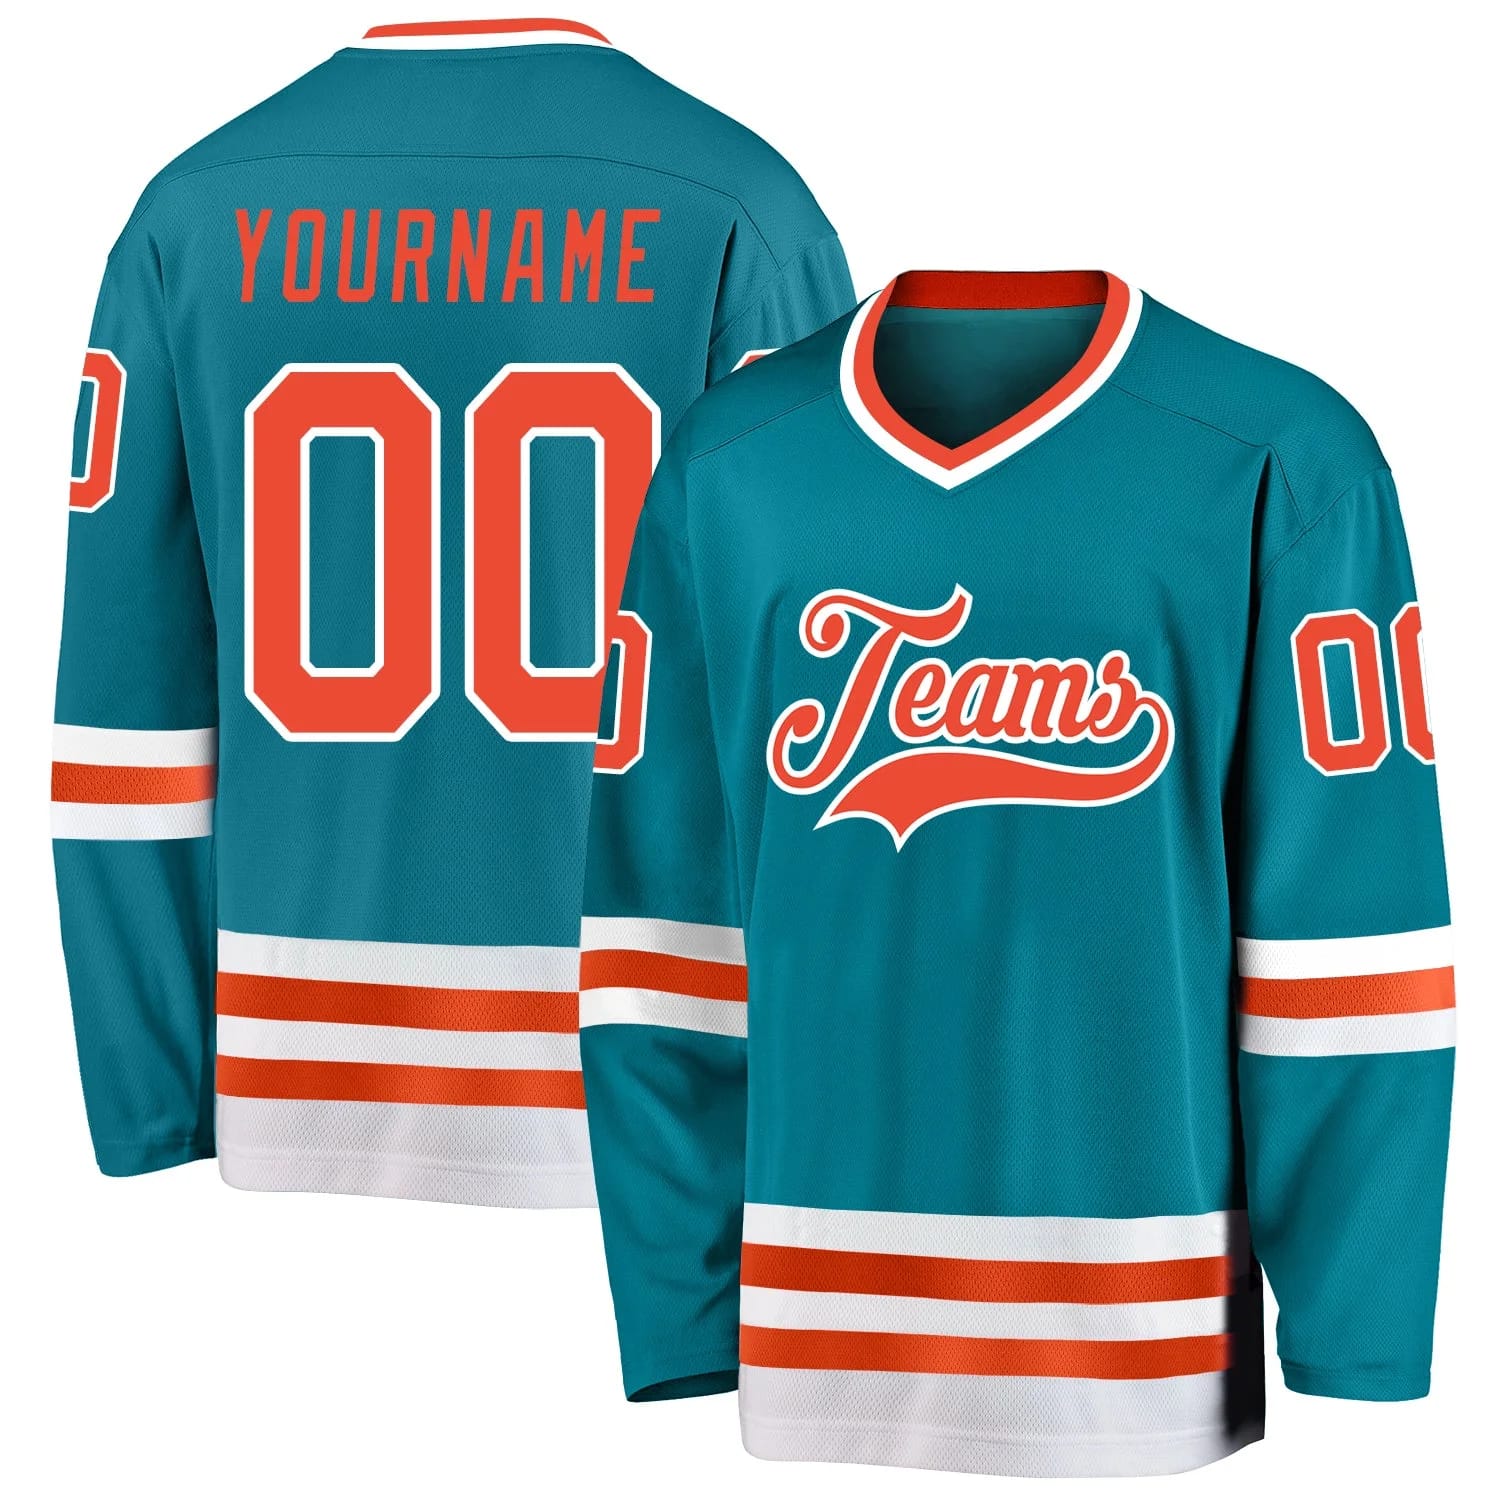 Stitched And Print Teal Orange-white Hockey Jersey Custom